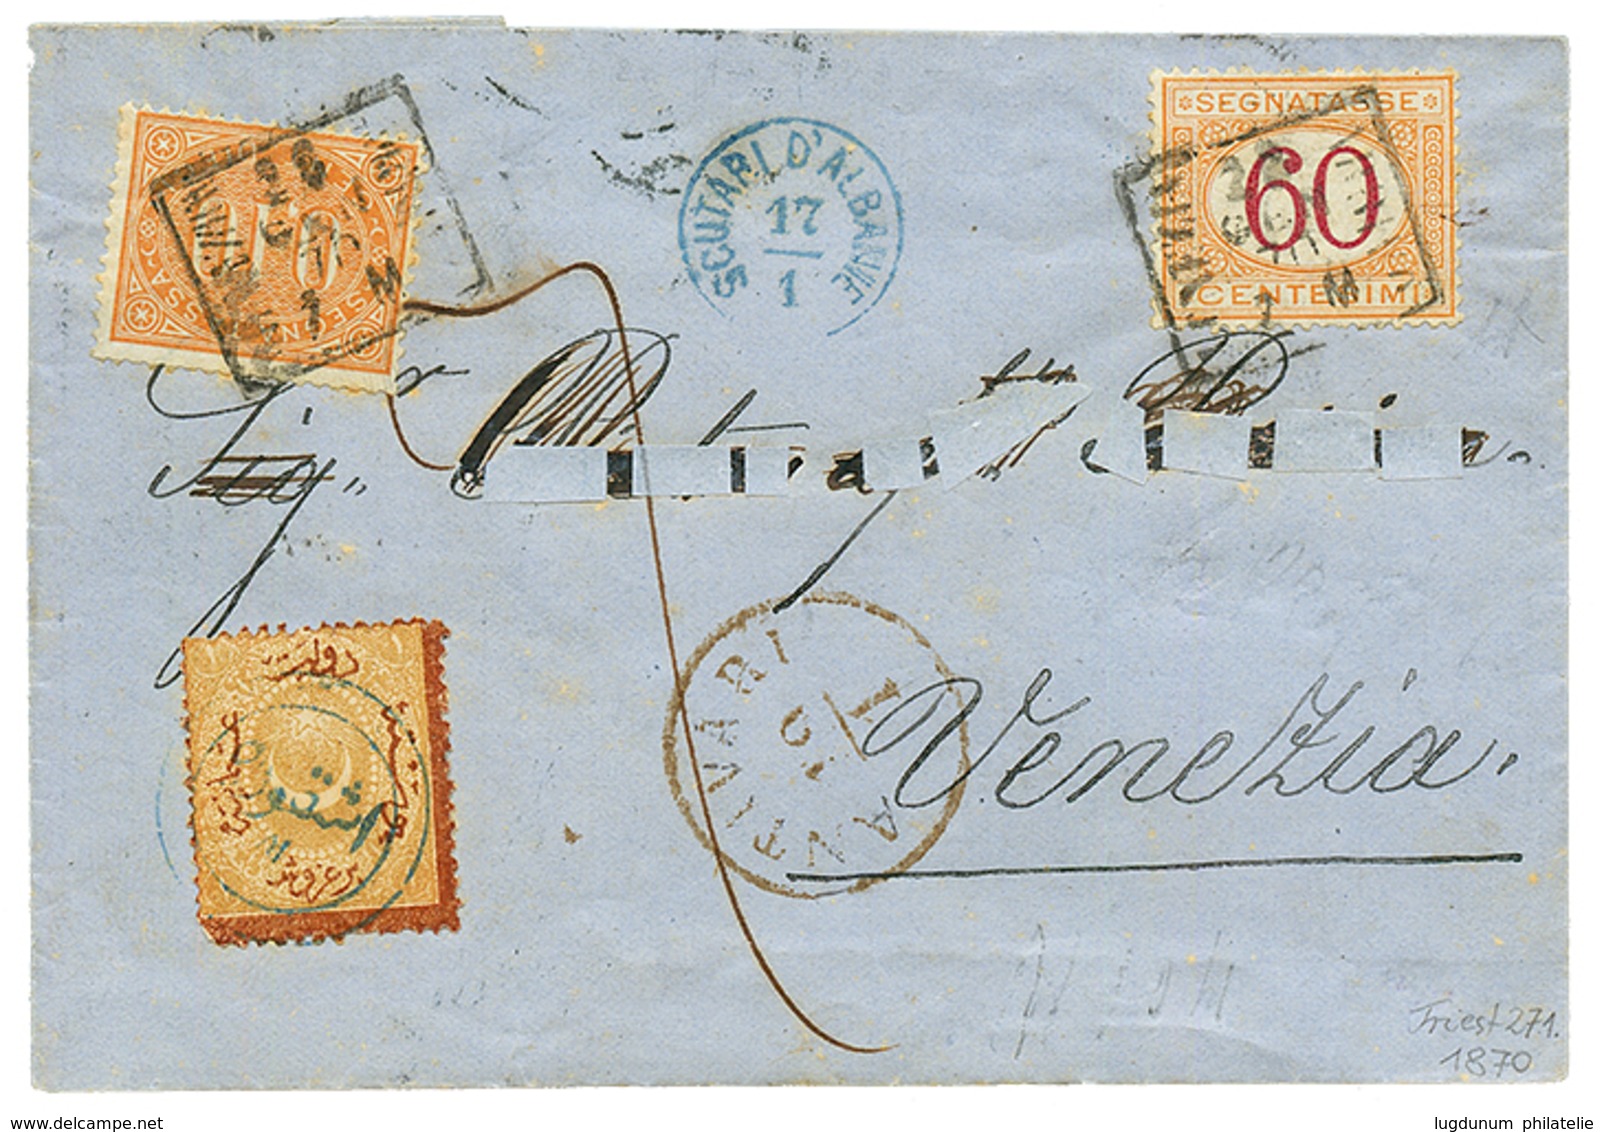 ANTIVARI : 1870 ANTIVARI + SCUTARI D' ALBANIE + Stamp From TURKEY + ITALIAN POSTAGE DUES 0,10 + 60c On Cover (fault) To  - Eastern Austria